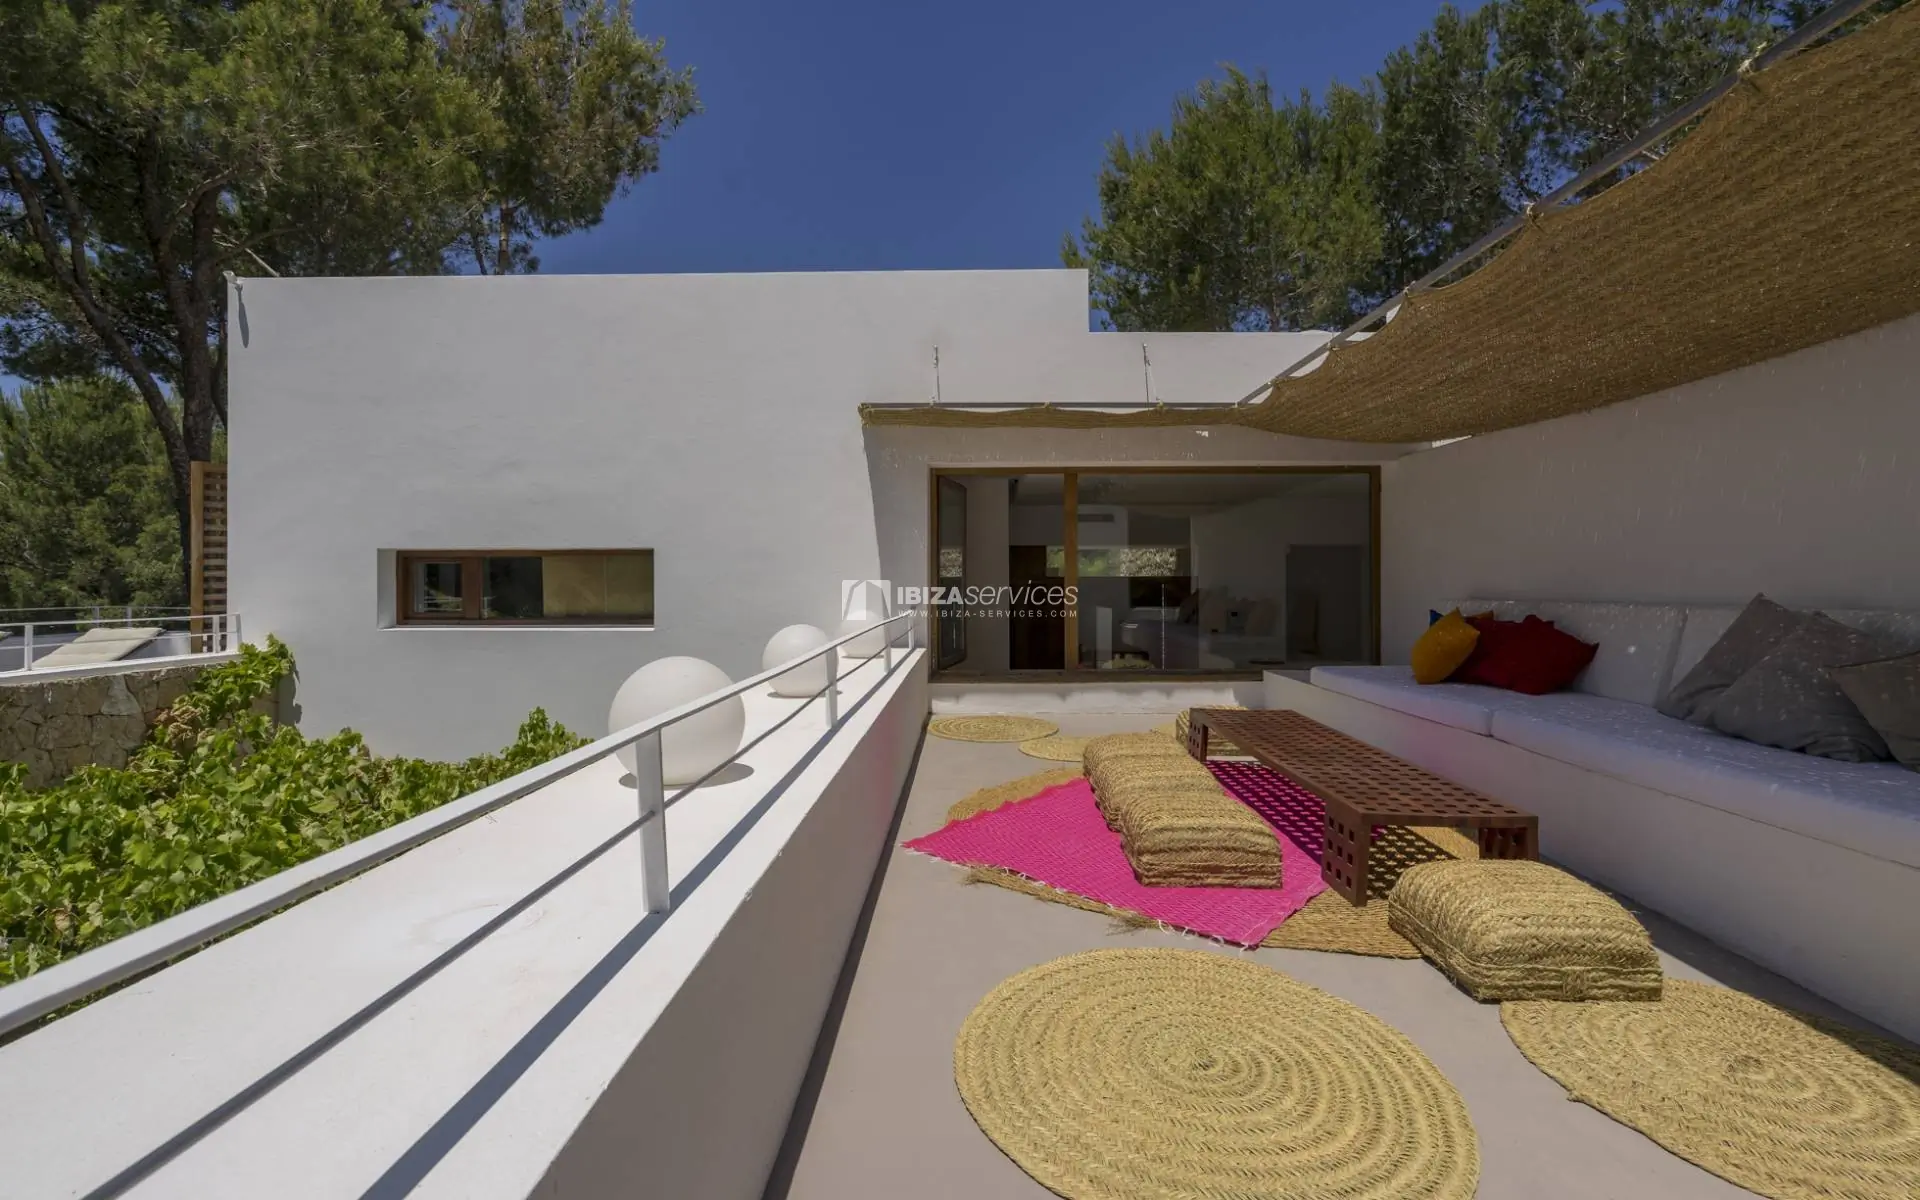 Ibiza holiday villa Andrea Can Furnet 4 bedrooms